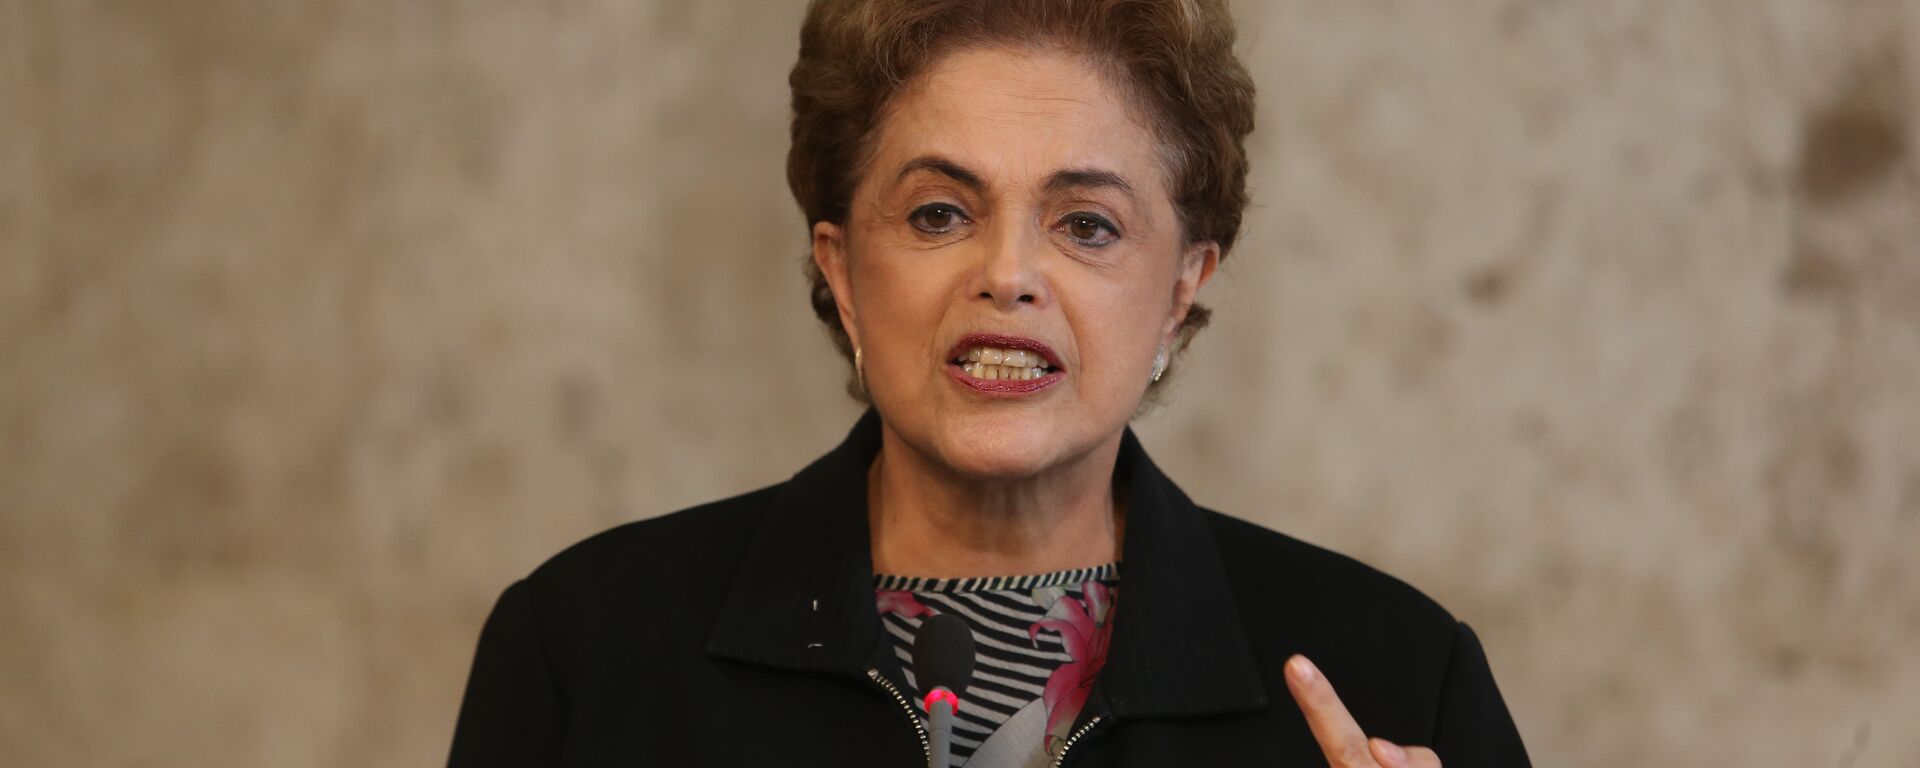 A presidenta da República, Dilma Rousseff, durante entrevista coletiva, no Palácio do Planalto. - Sputnik Brasil, 1920, 31.01.2022